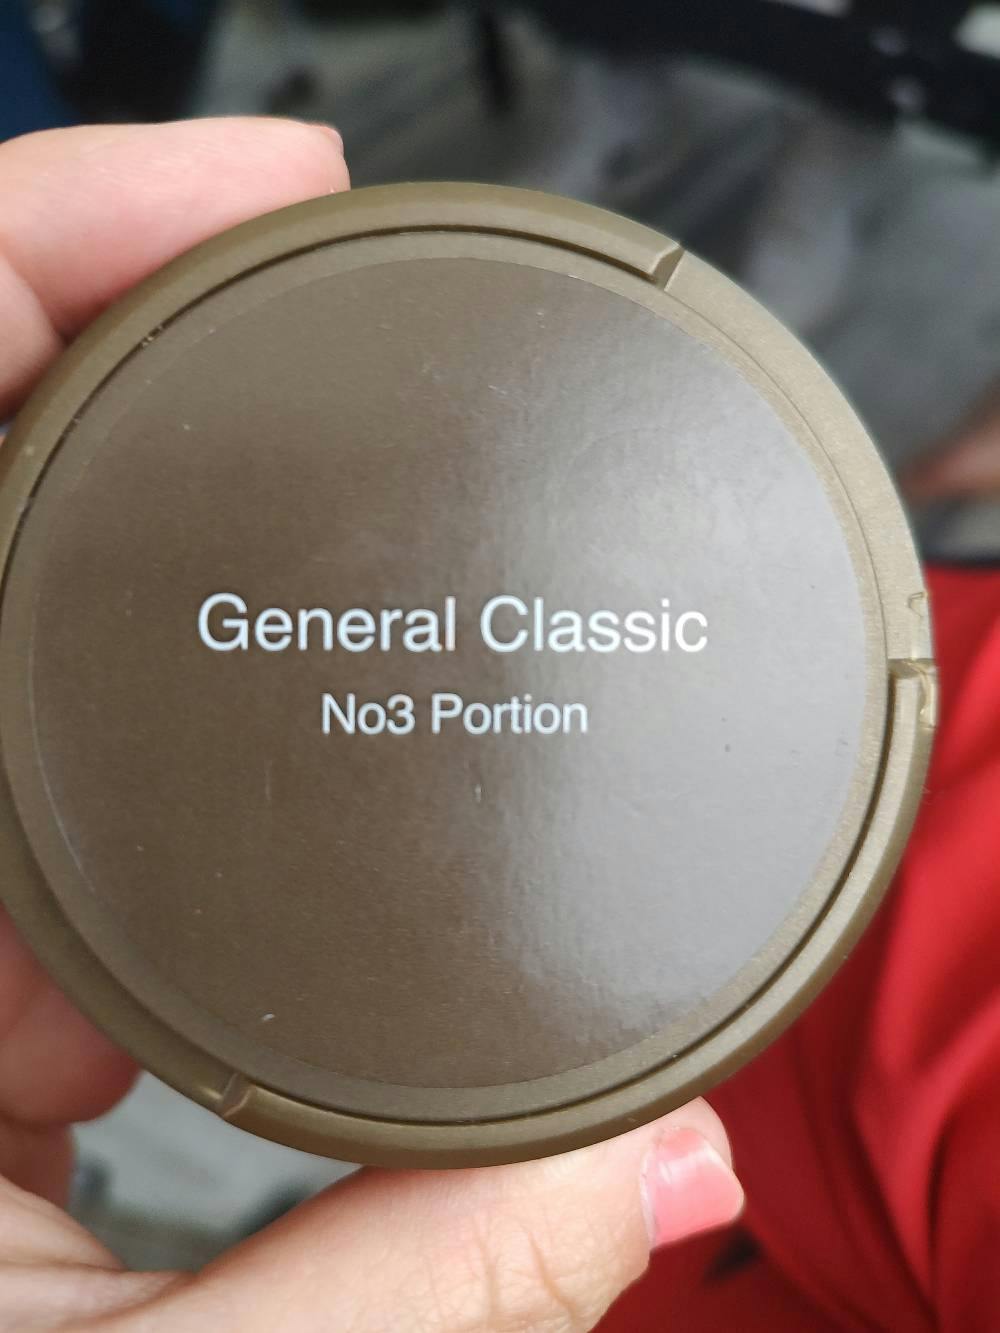 General Classic No3 Portion, General